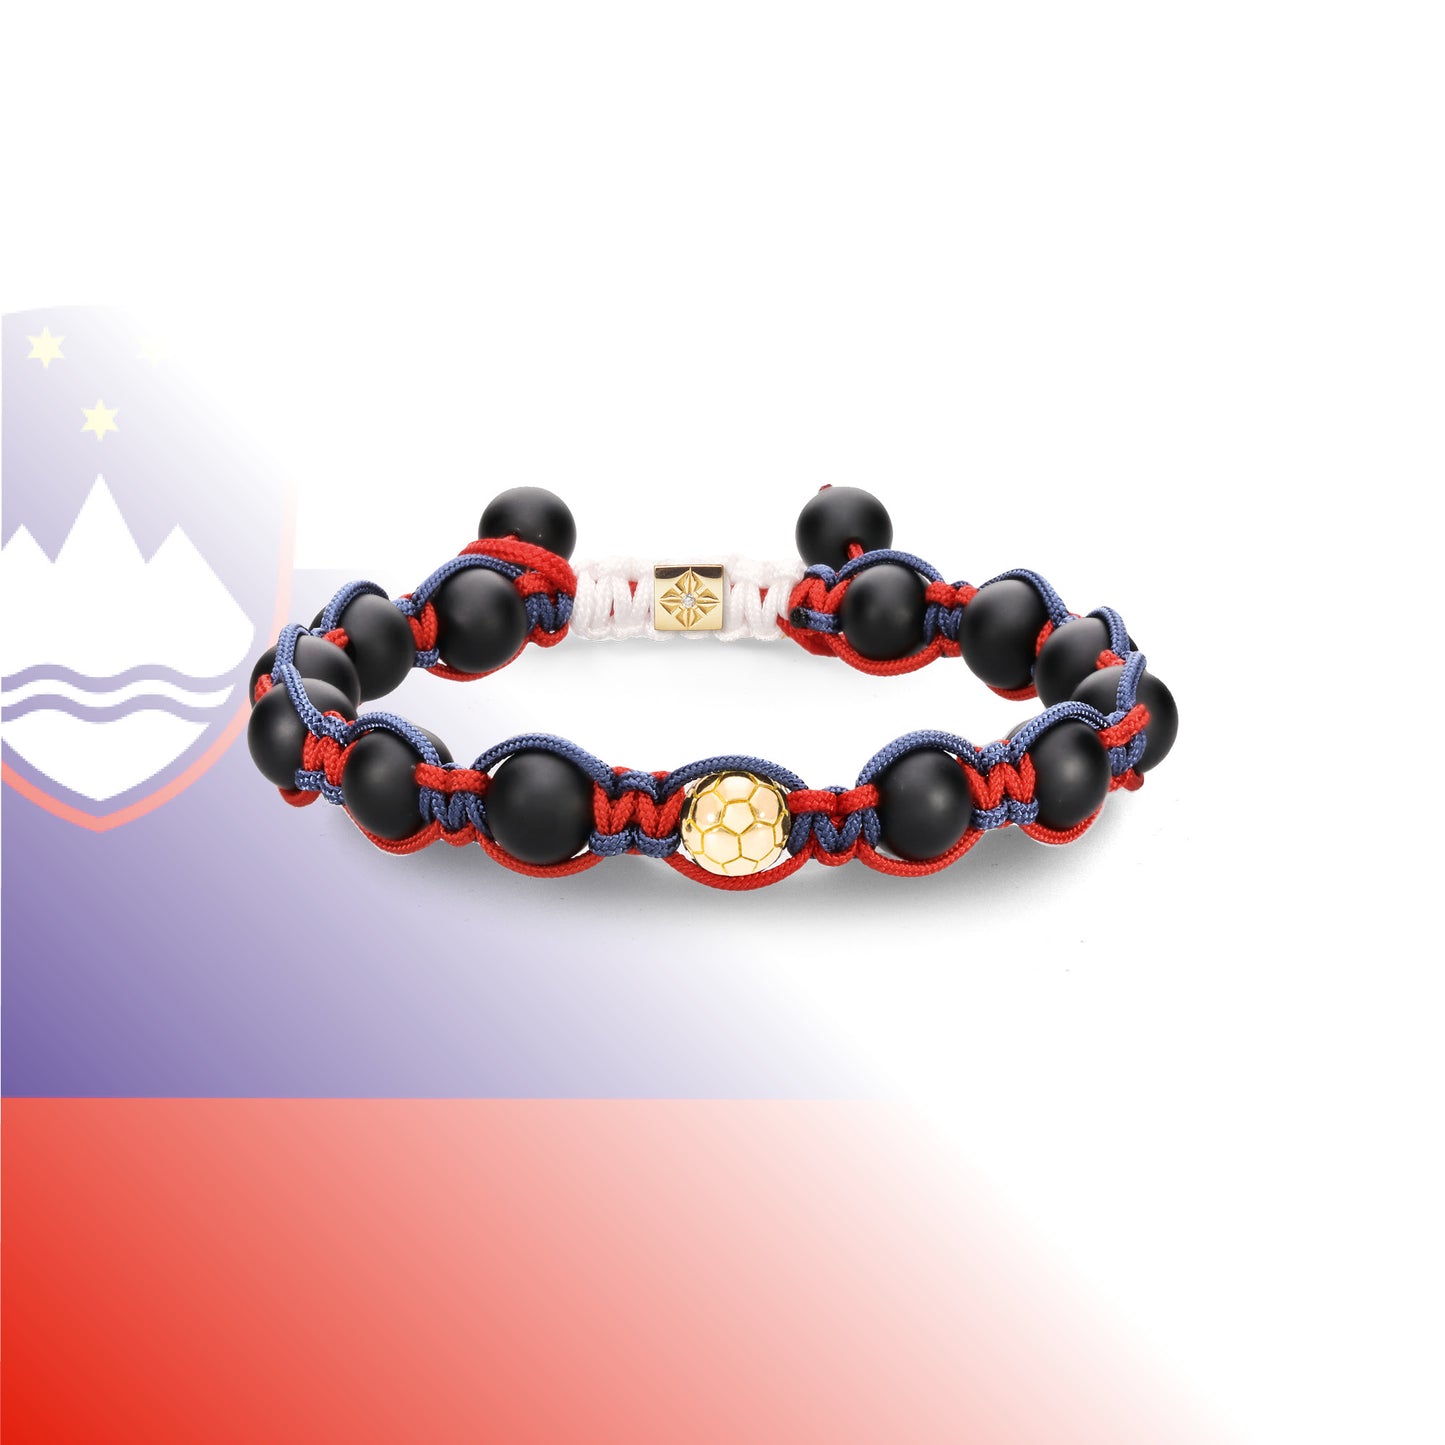 "Slovenia" - Braided Bracelet